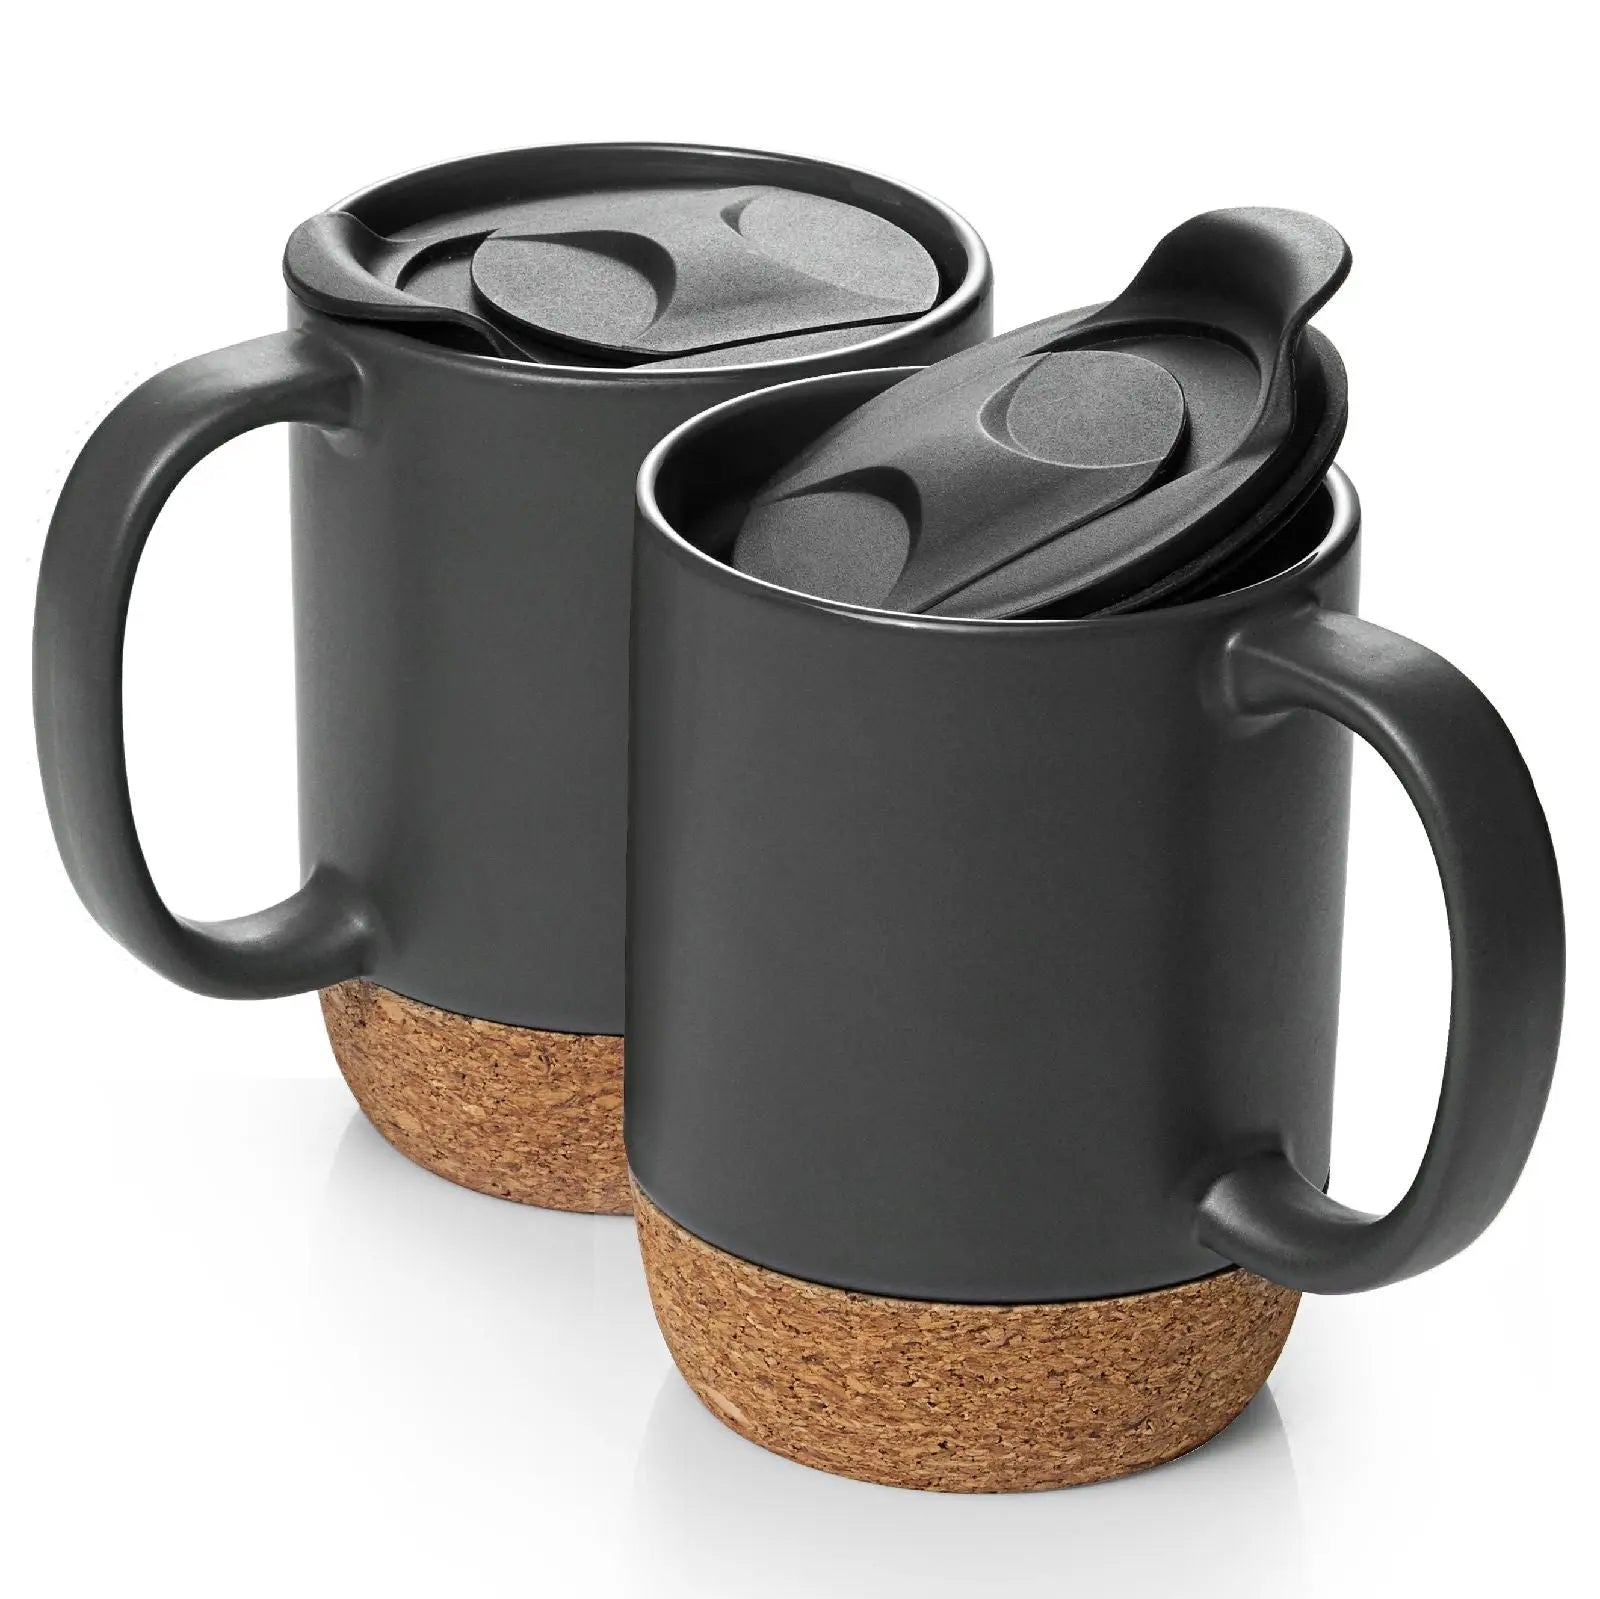 Pine Cones Dishwasher Safe Microwavable Ceramic Coffee Mug 15 oz